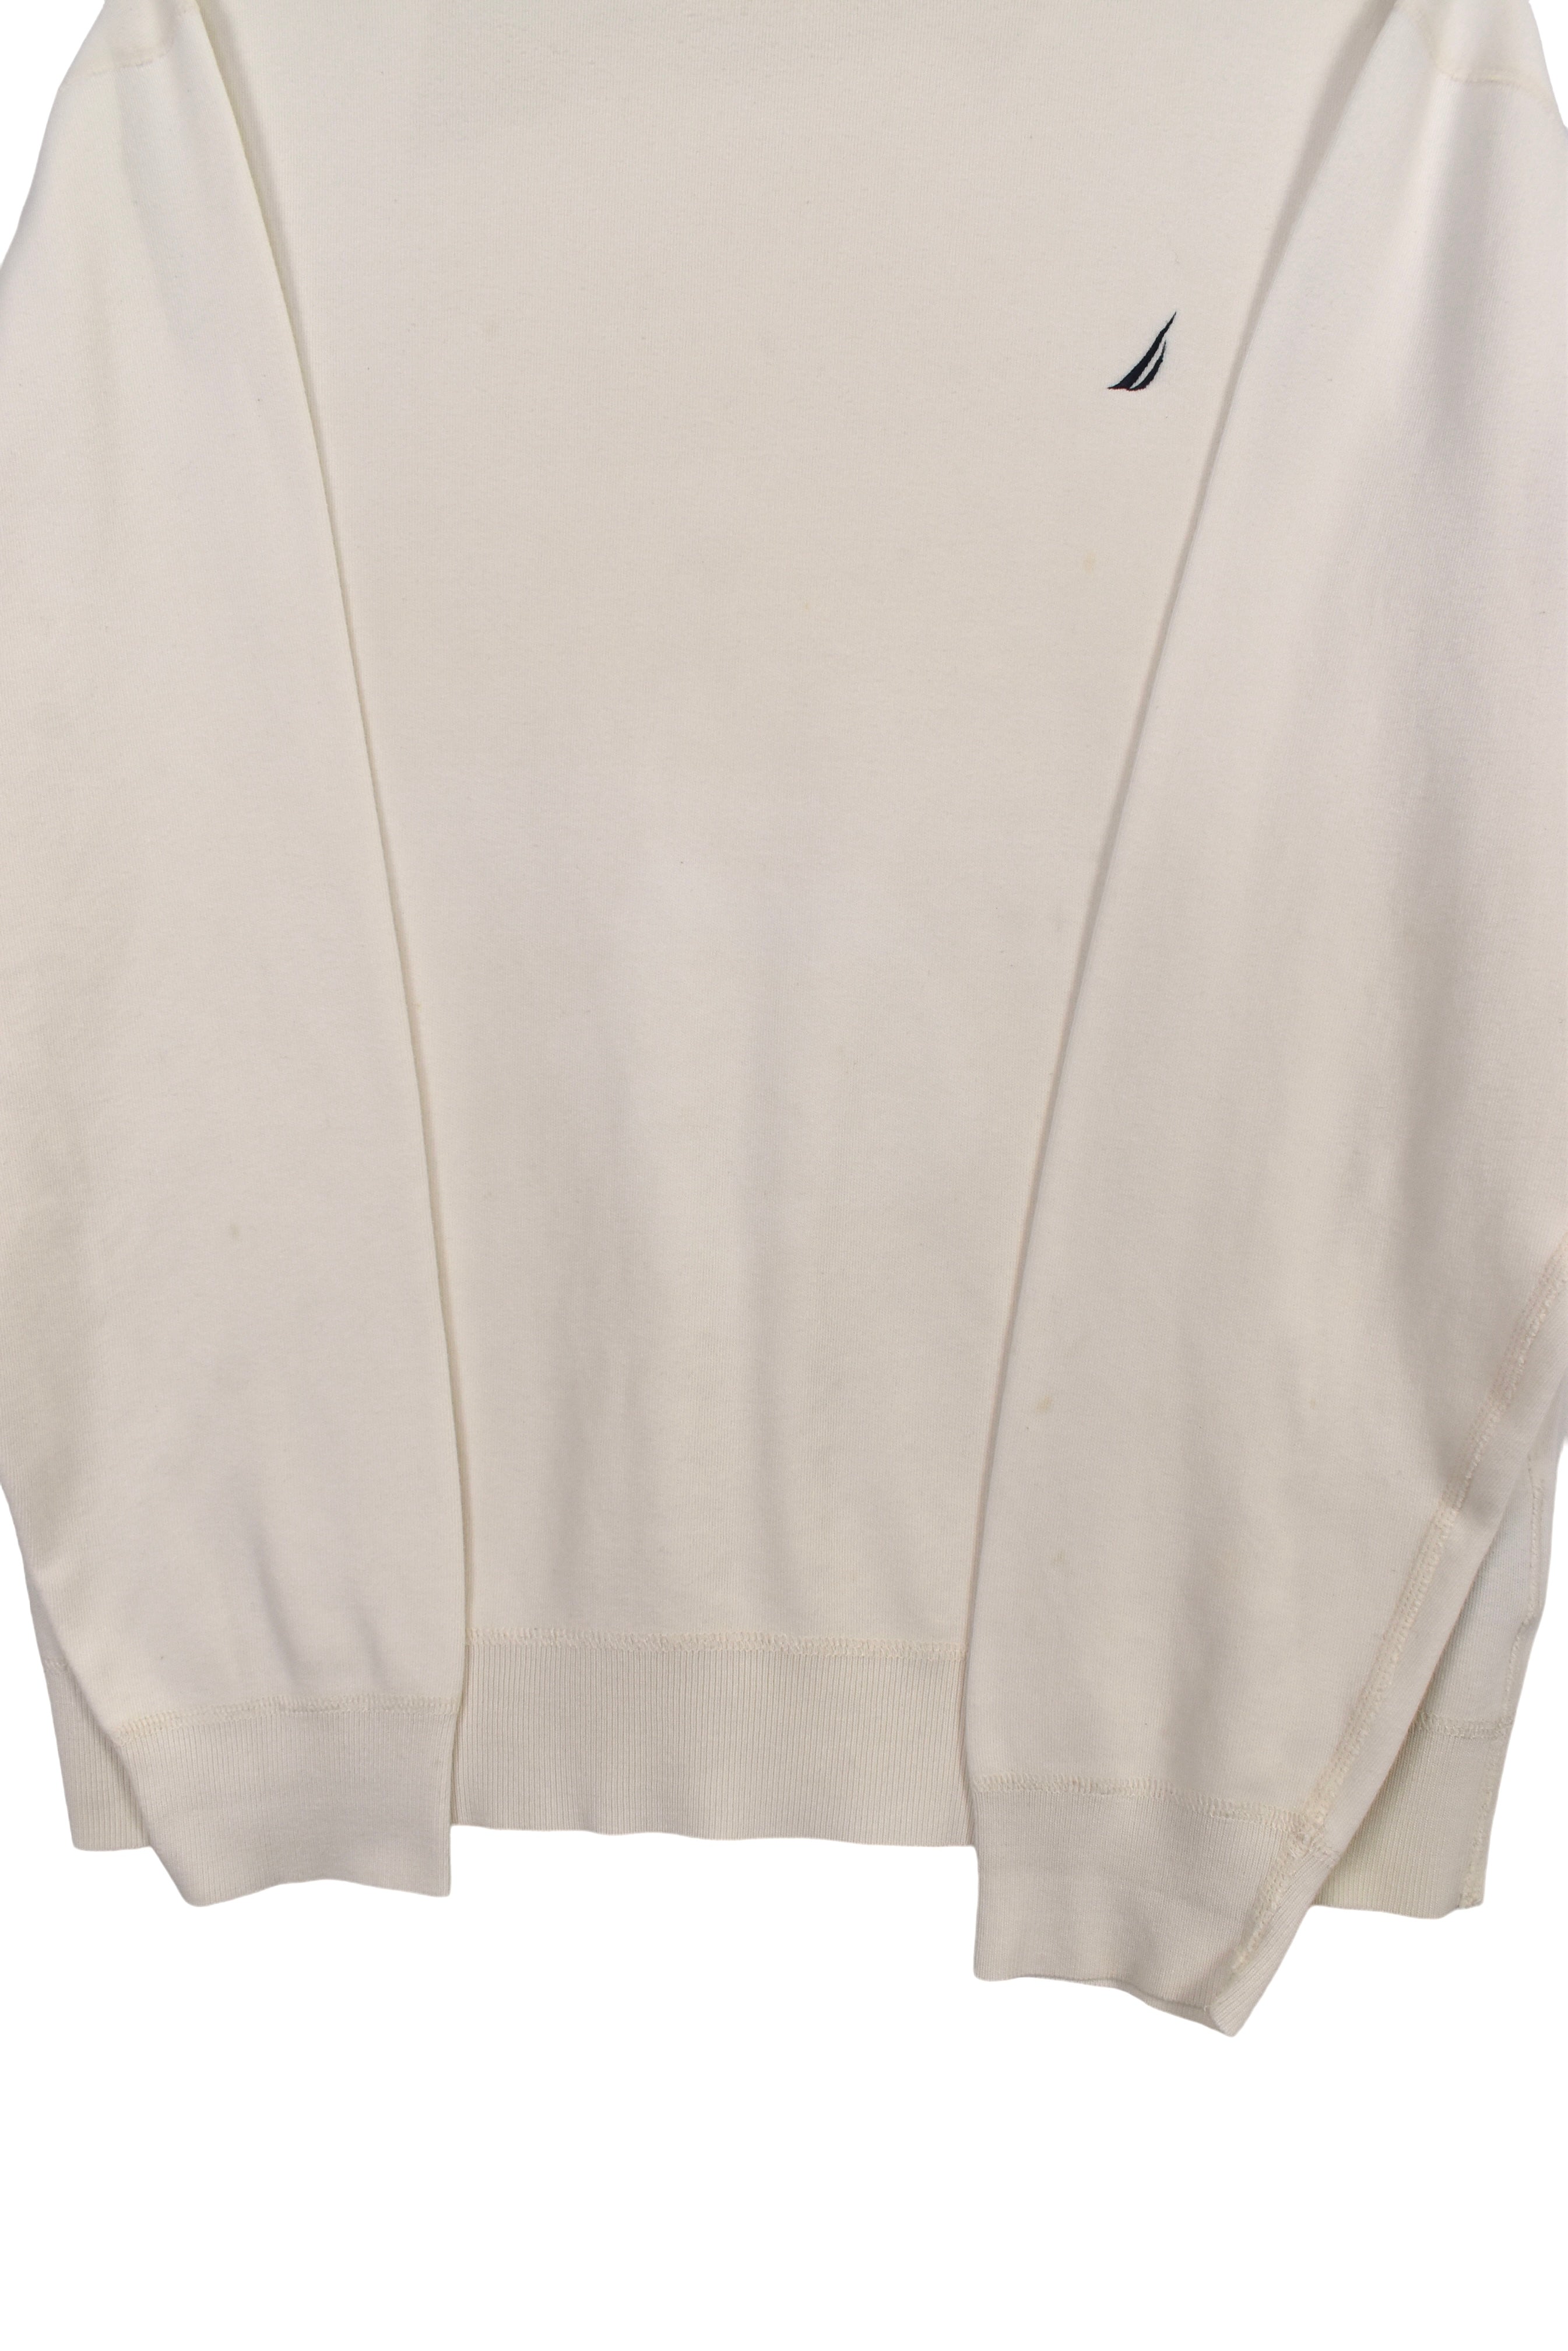 Vintage Nautica sweatshirt (M), white embroidered crewneck